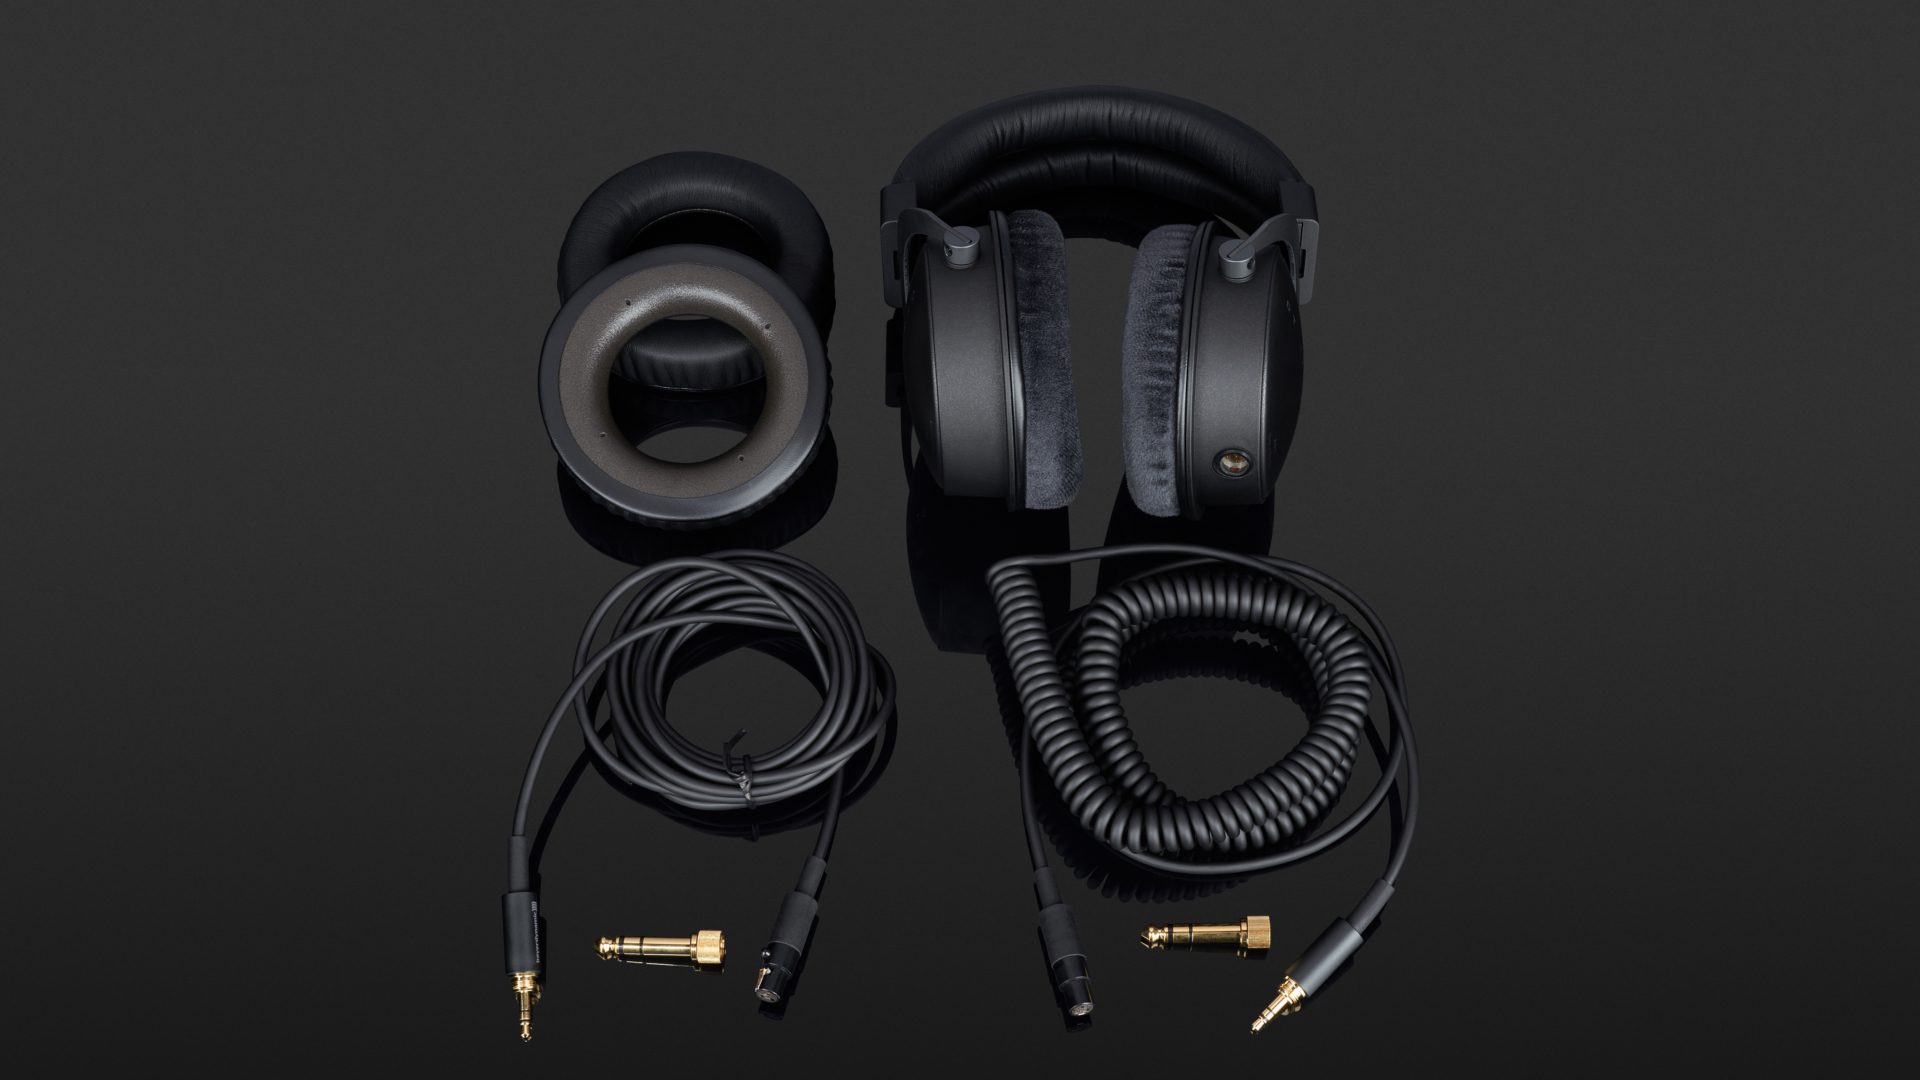 Beyerdynamic DT 1770 Pro Review | headphonecheck.com